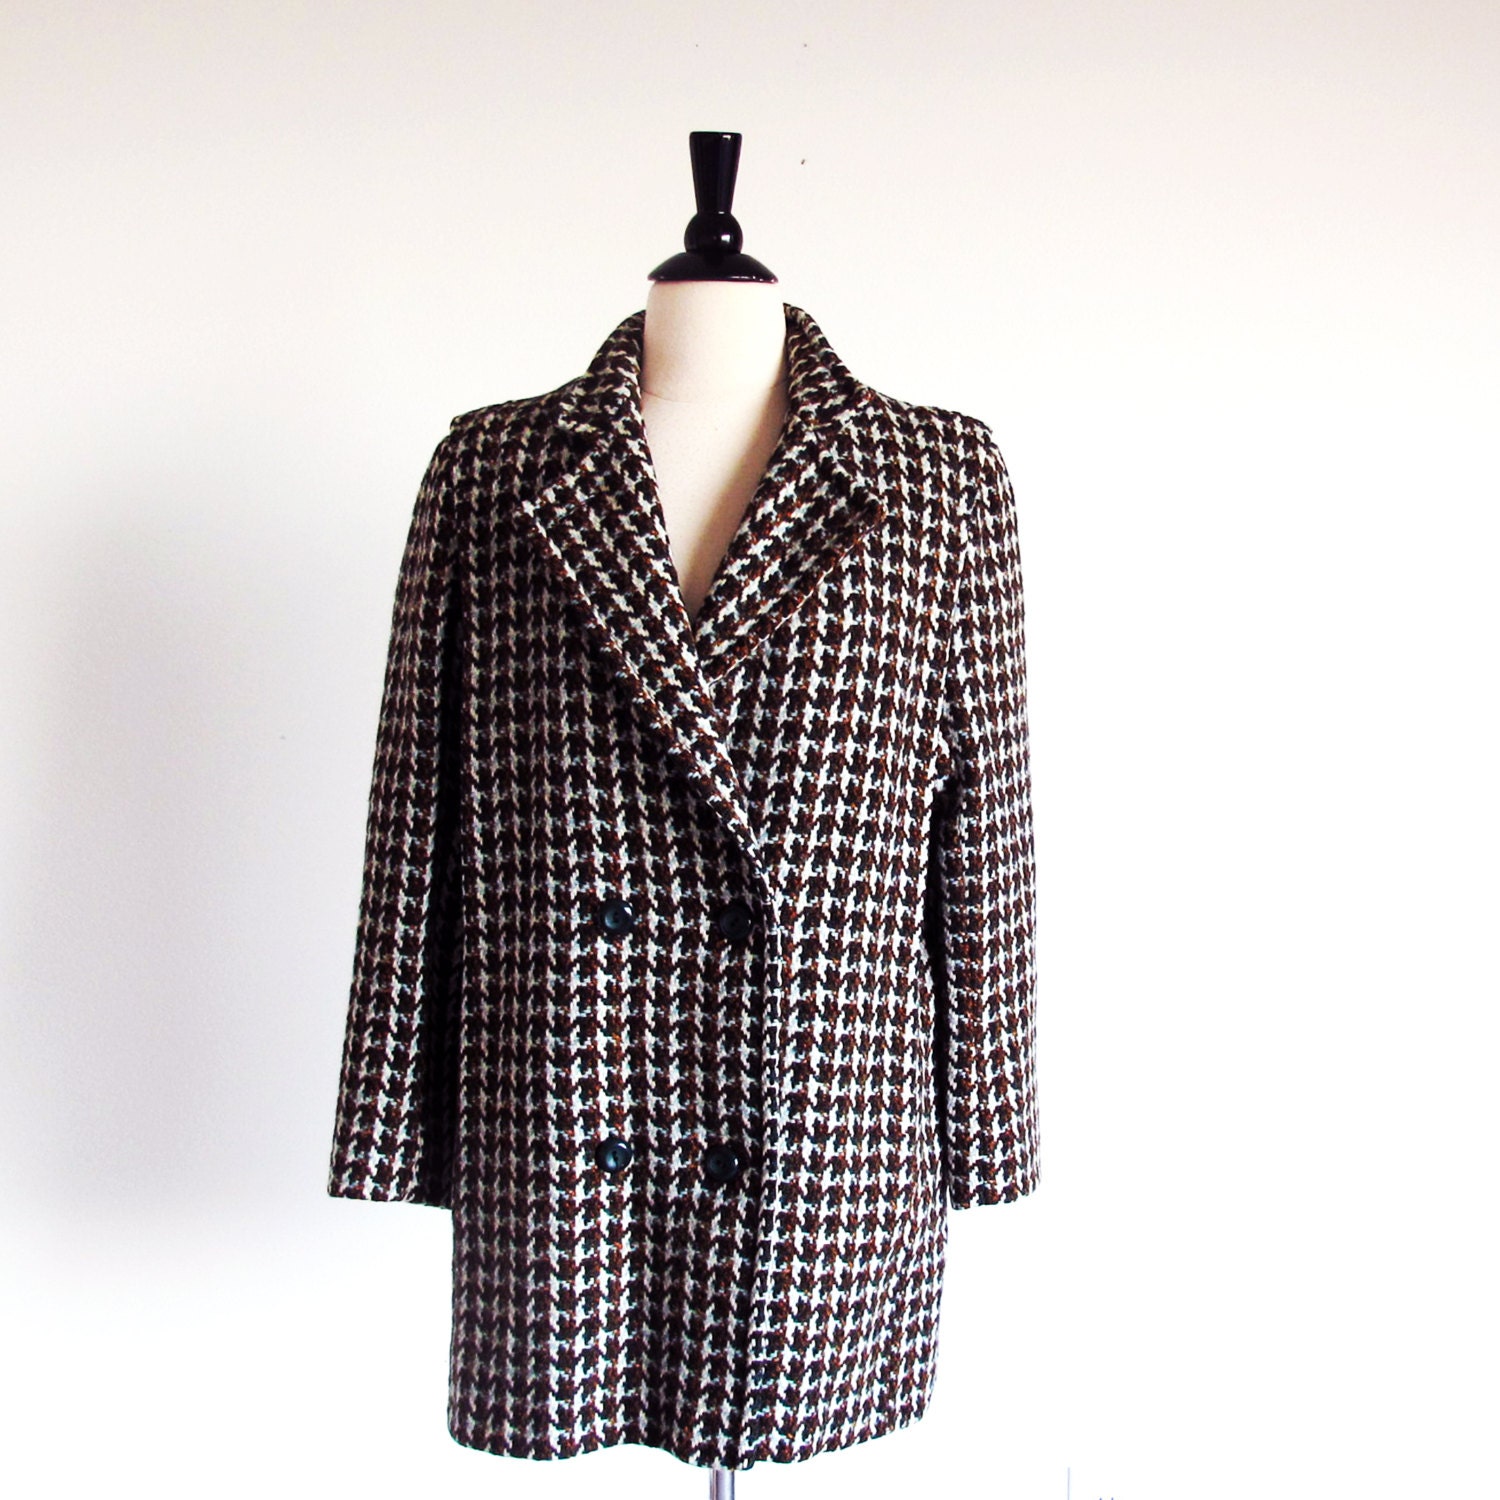 Harris Tweed Jacket Womens Wool Plaid Jacket by StraylightVintage